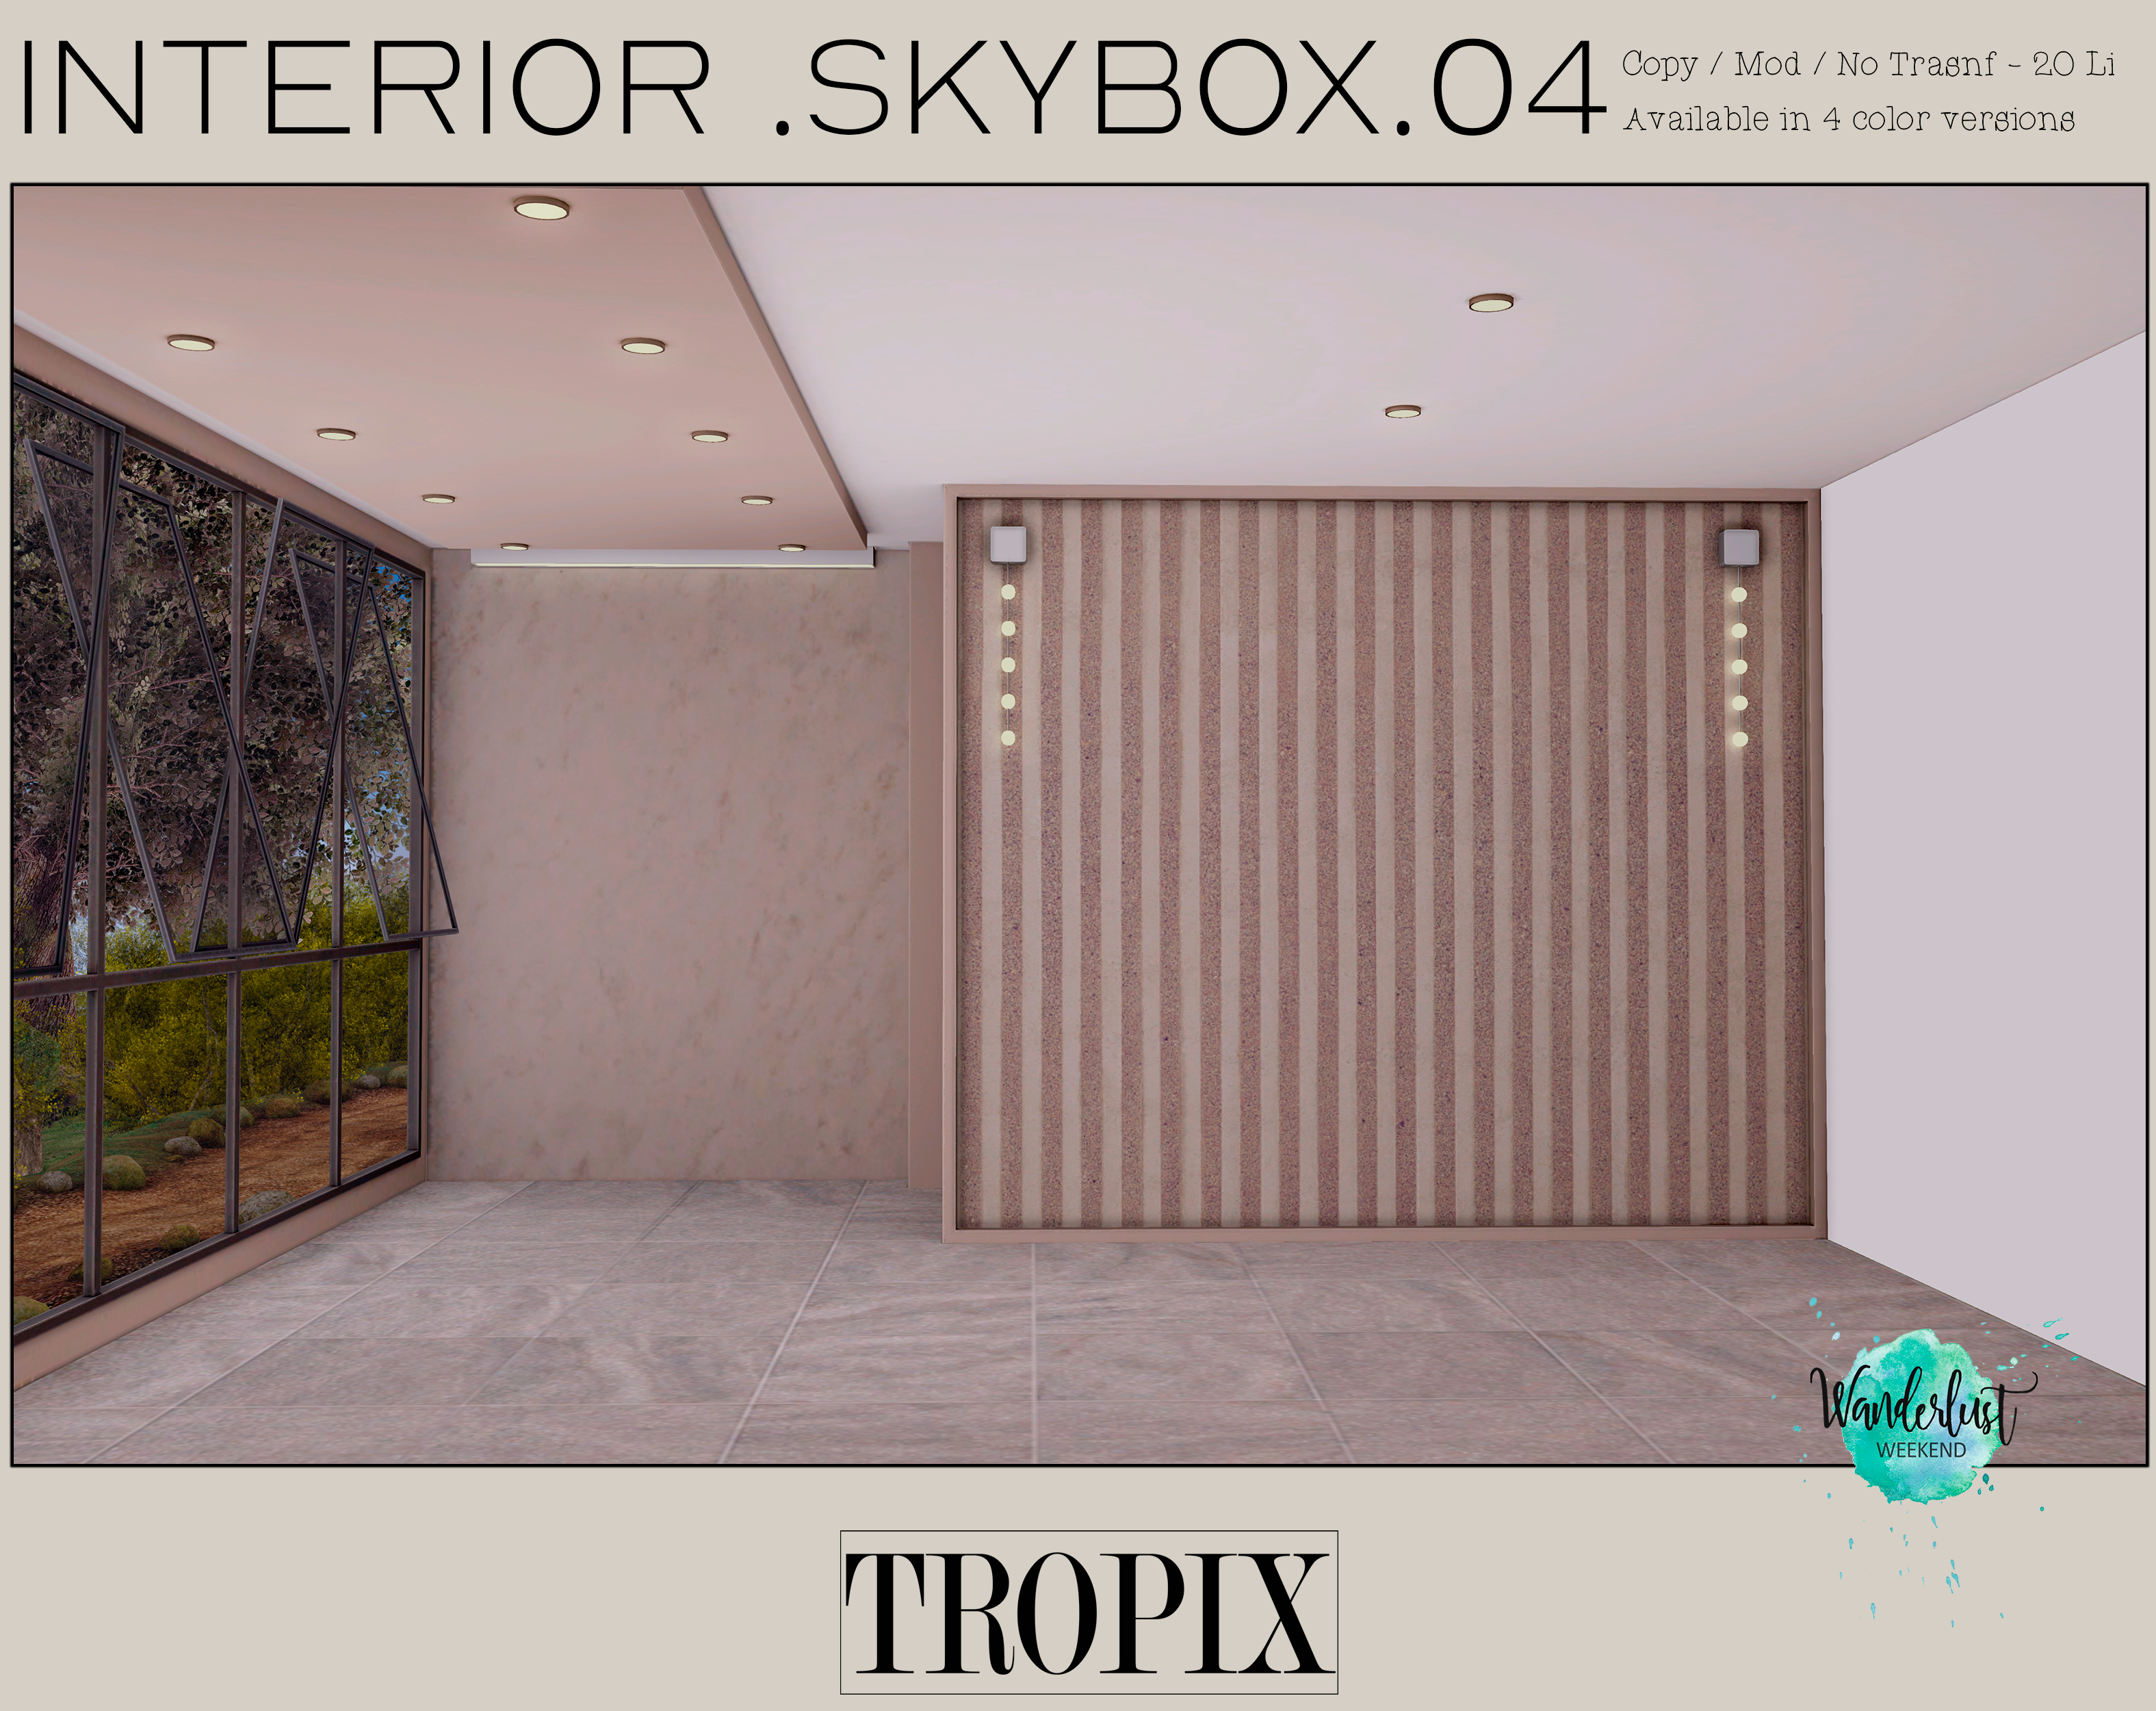 Tropix – Interior Skybox